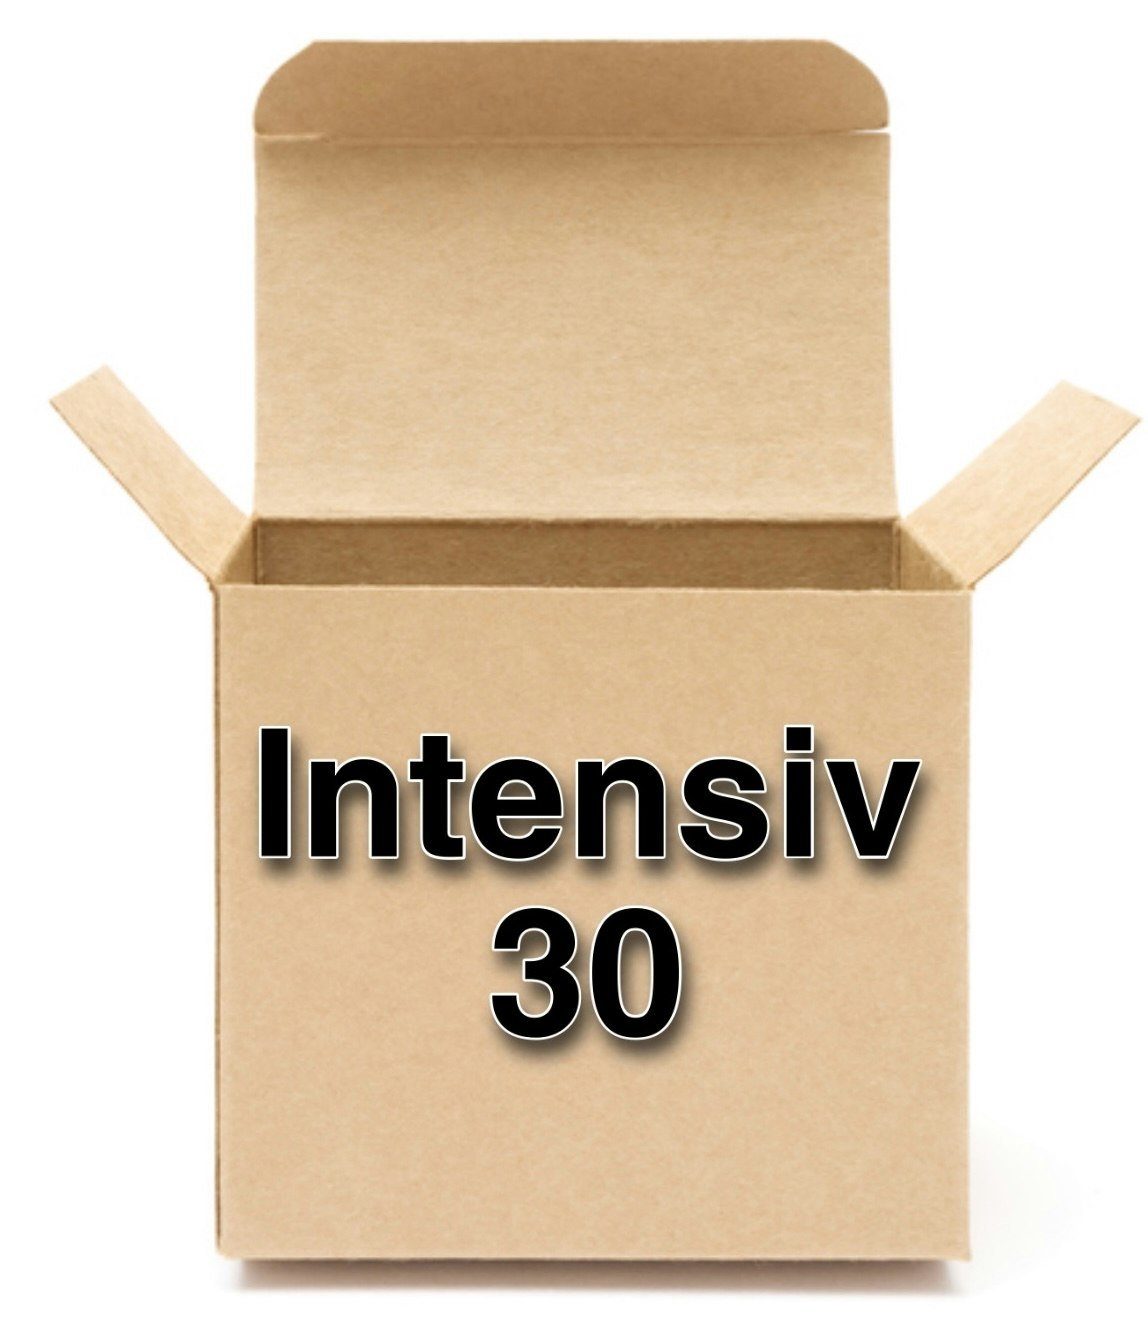 Intensiv 30